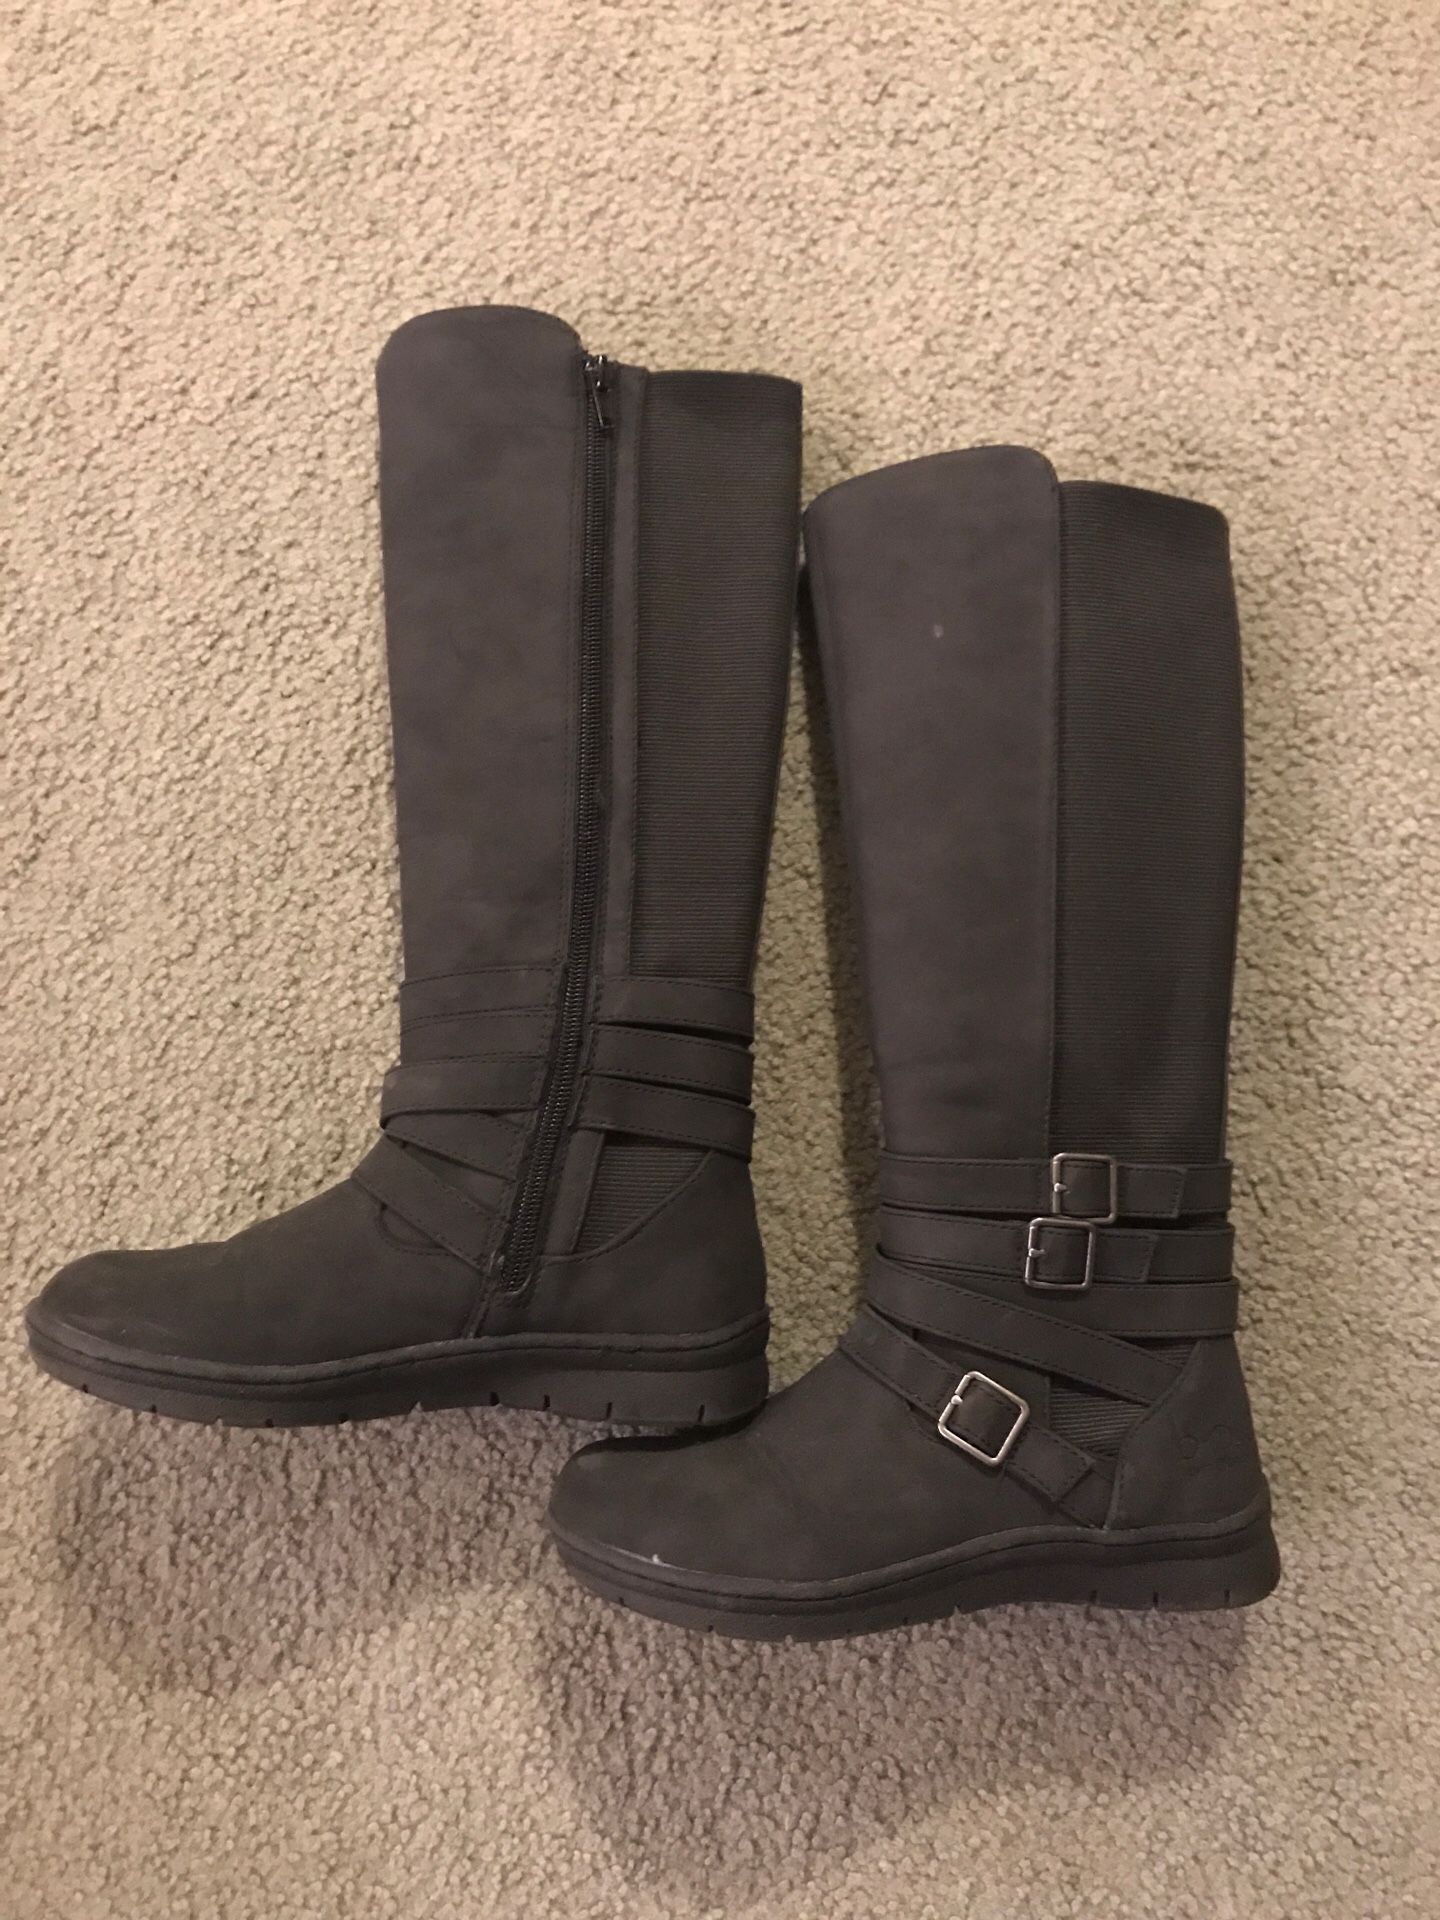 BOC girls size 2 boots